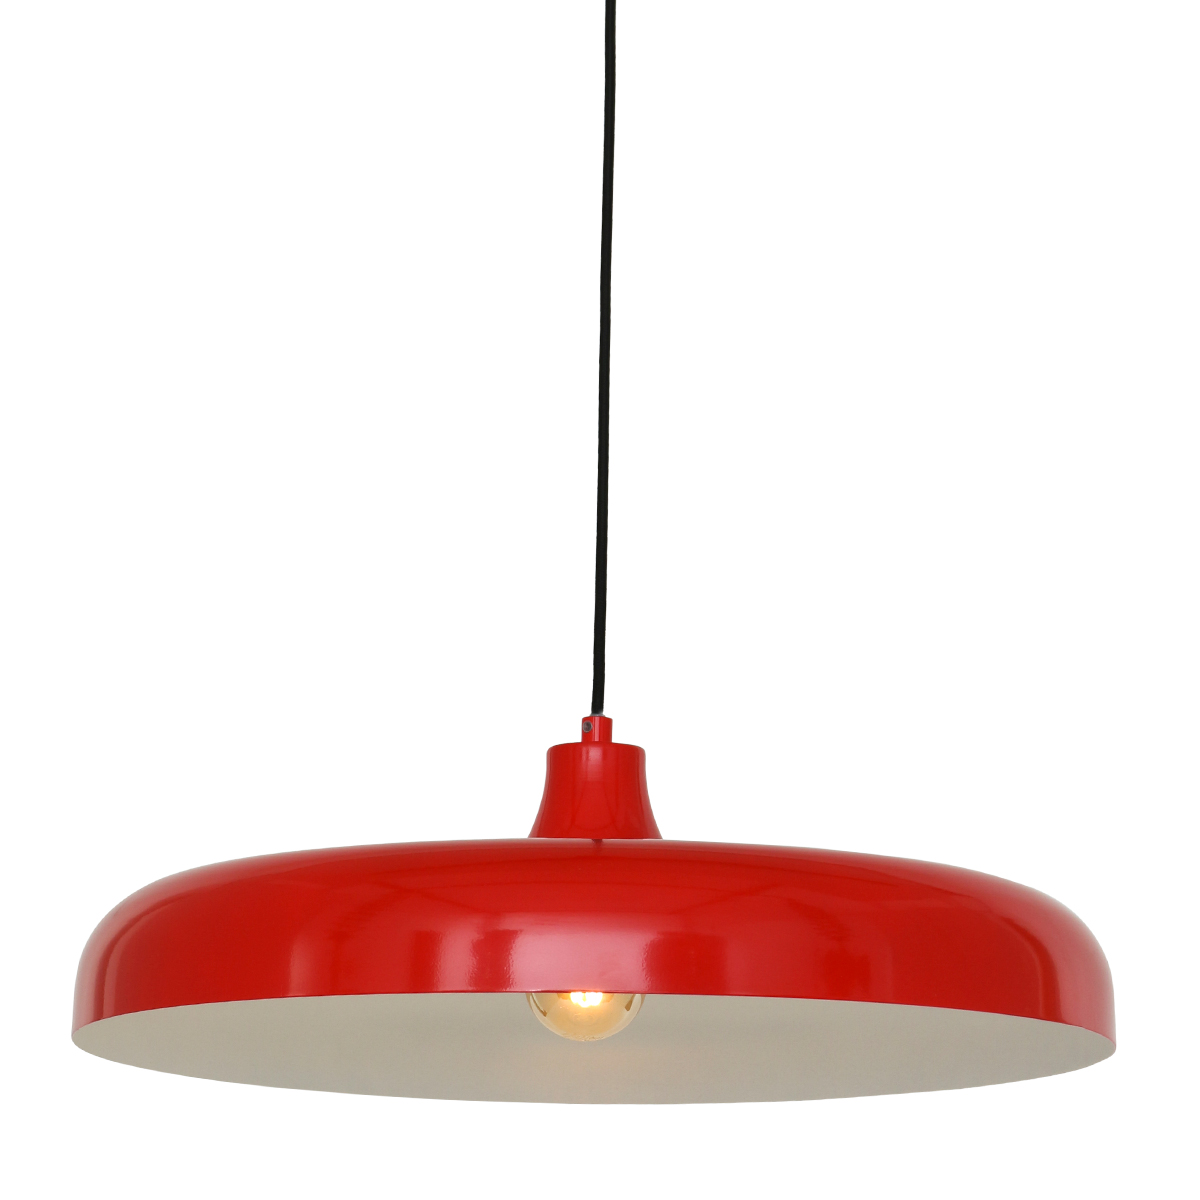 Warmte Wantrouwen intern Rode metalen moderne hanglamp Krisip | Industriele lampen online